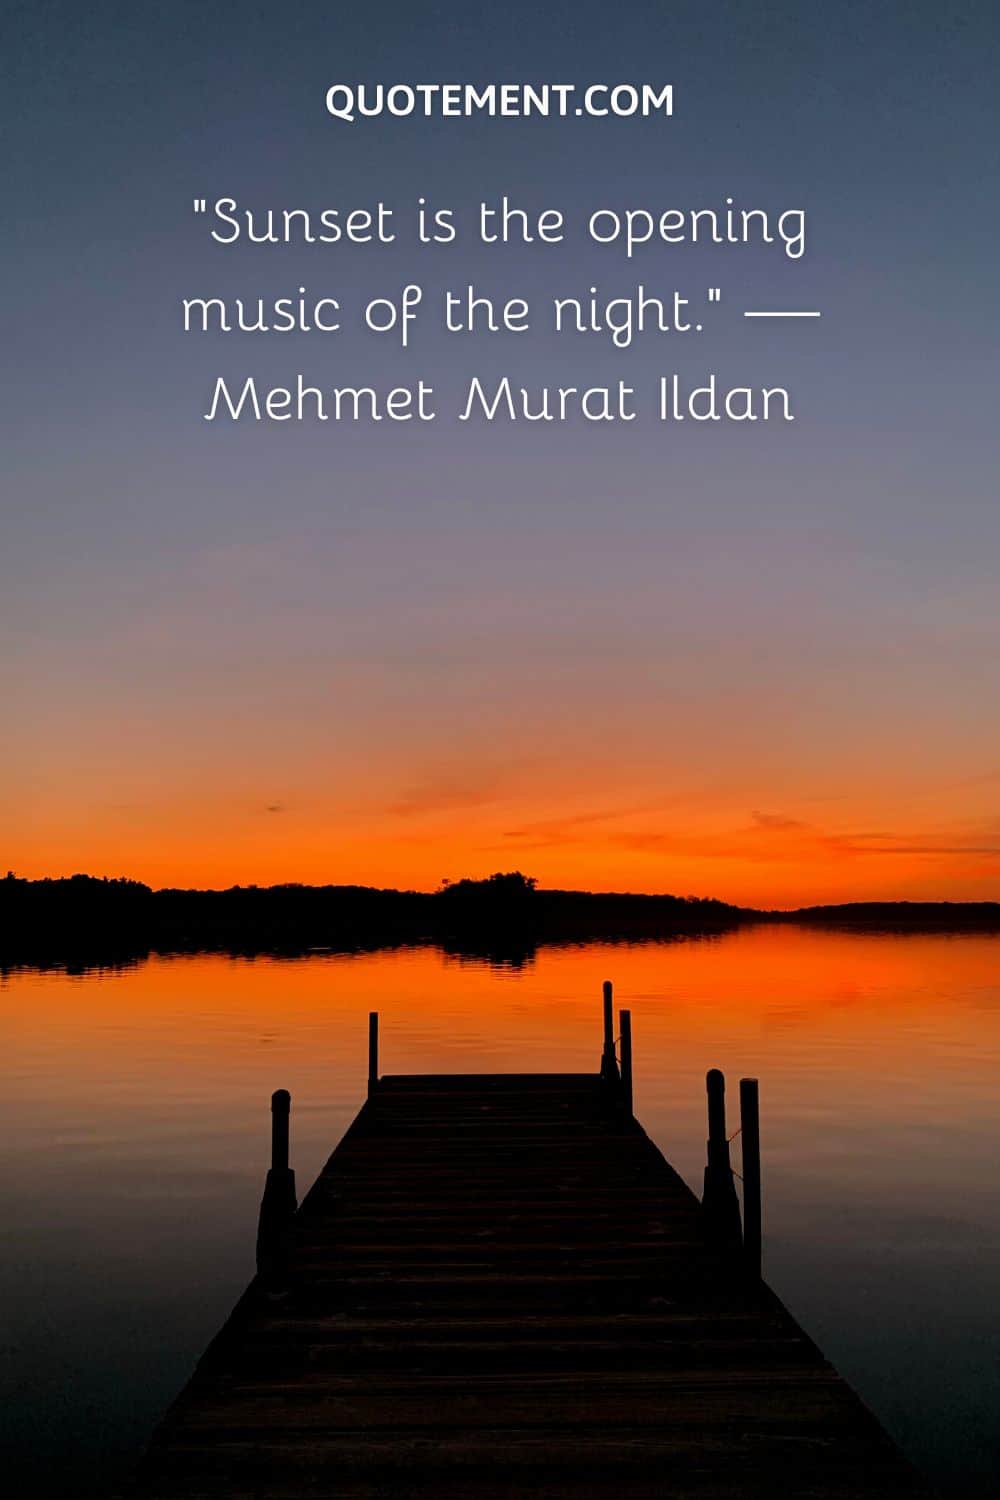 “Sunset is the opening music of the night.” — Mehmet Murat Ildan